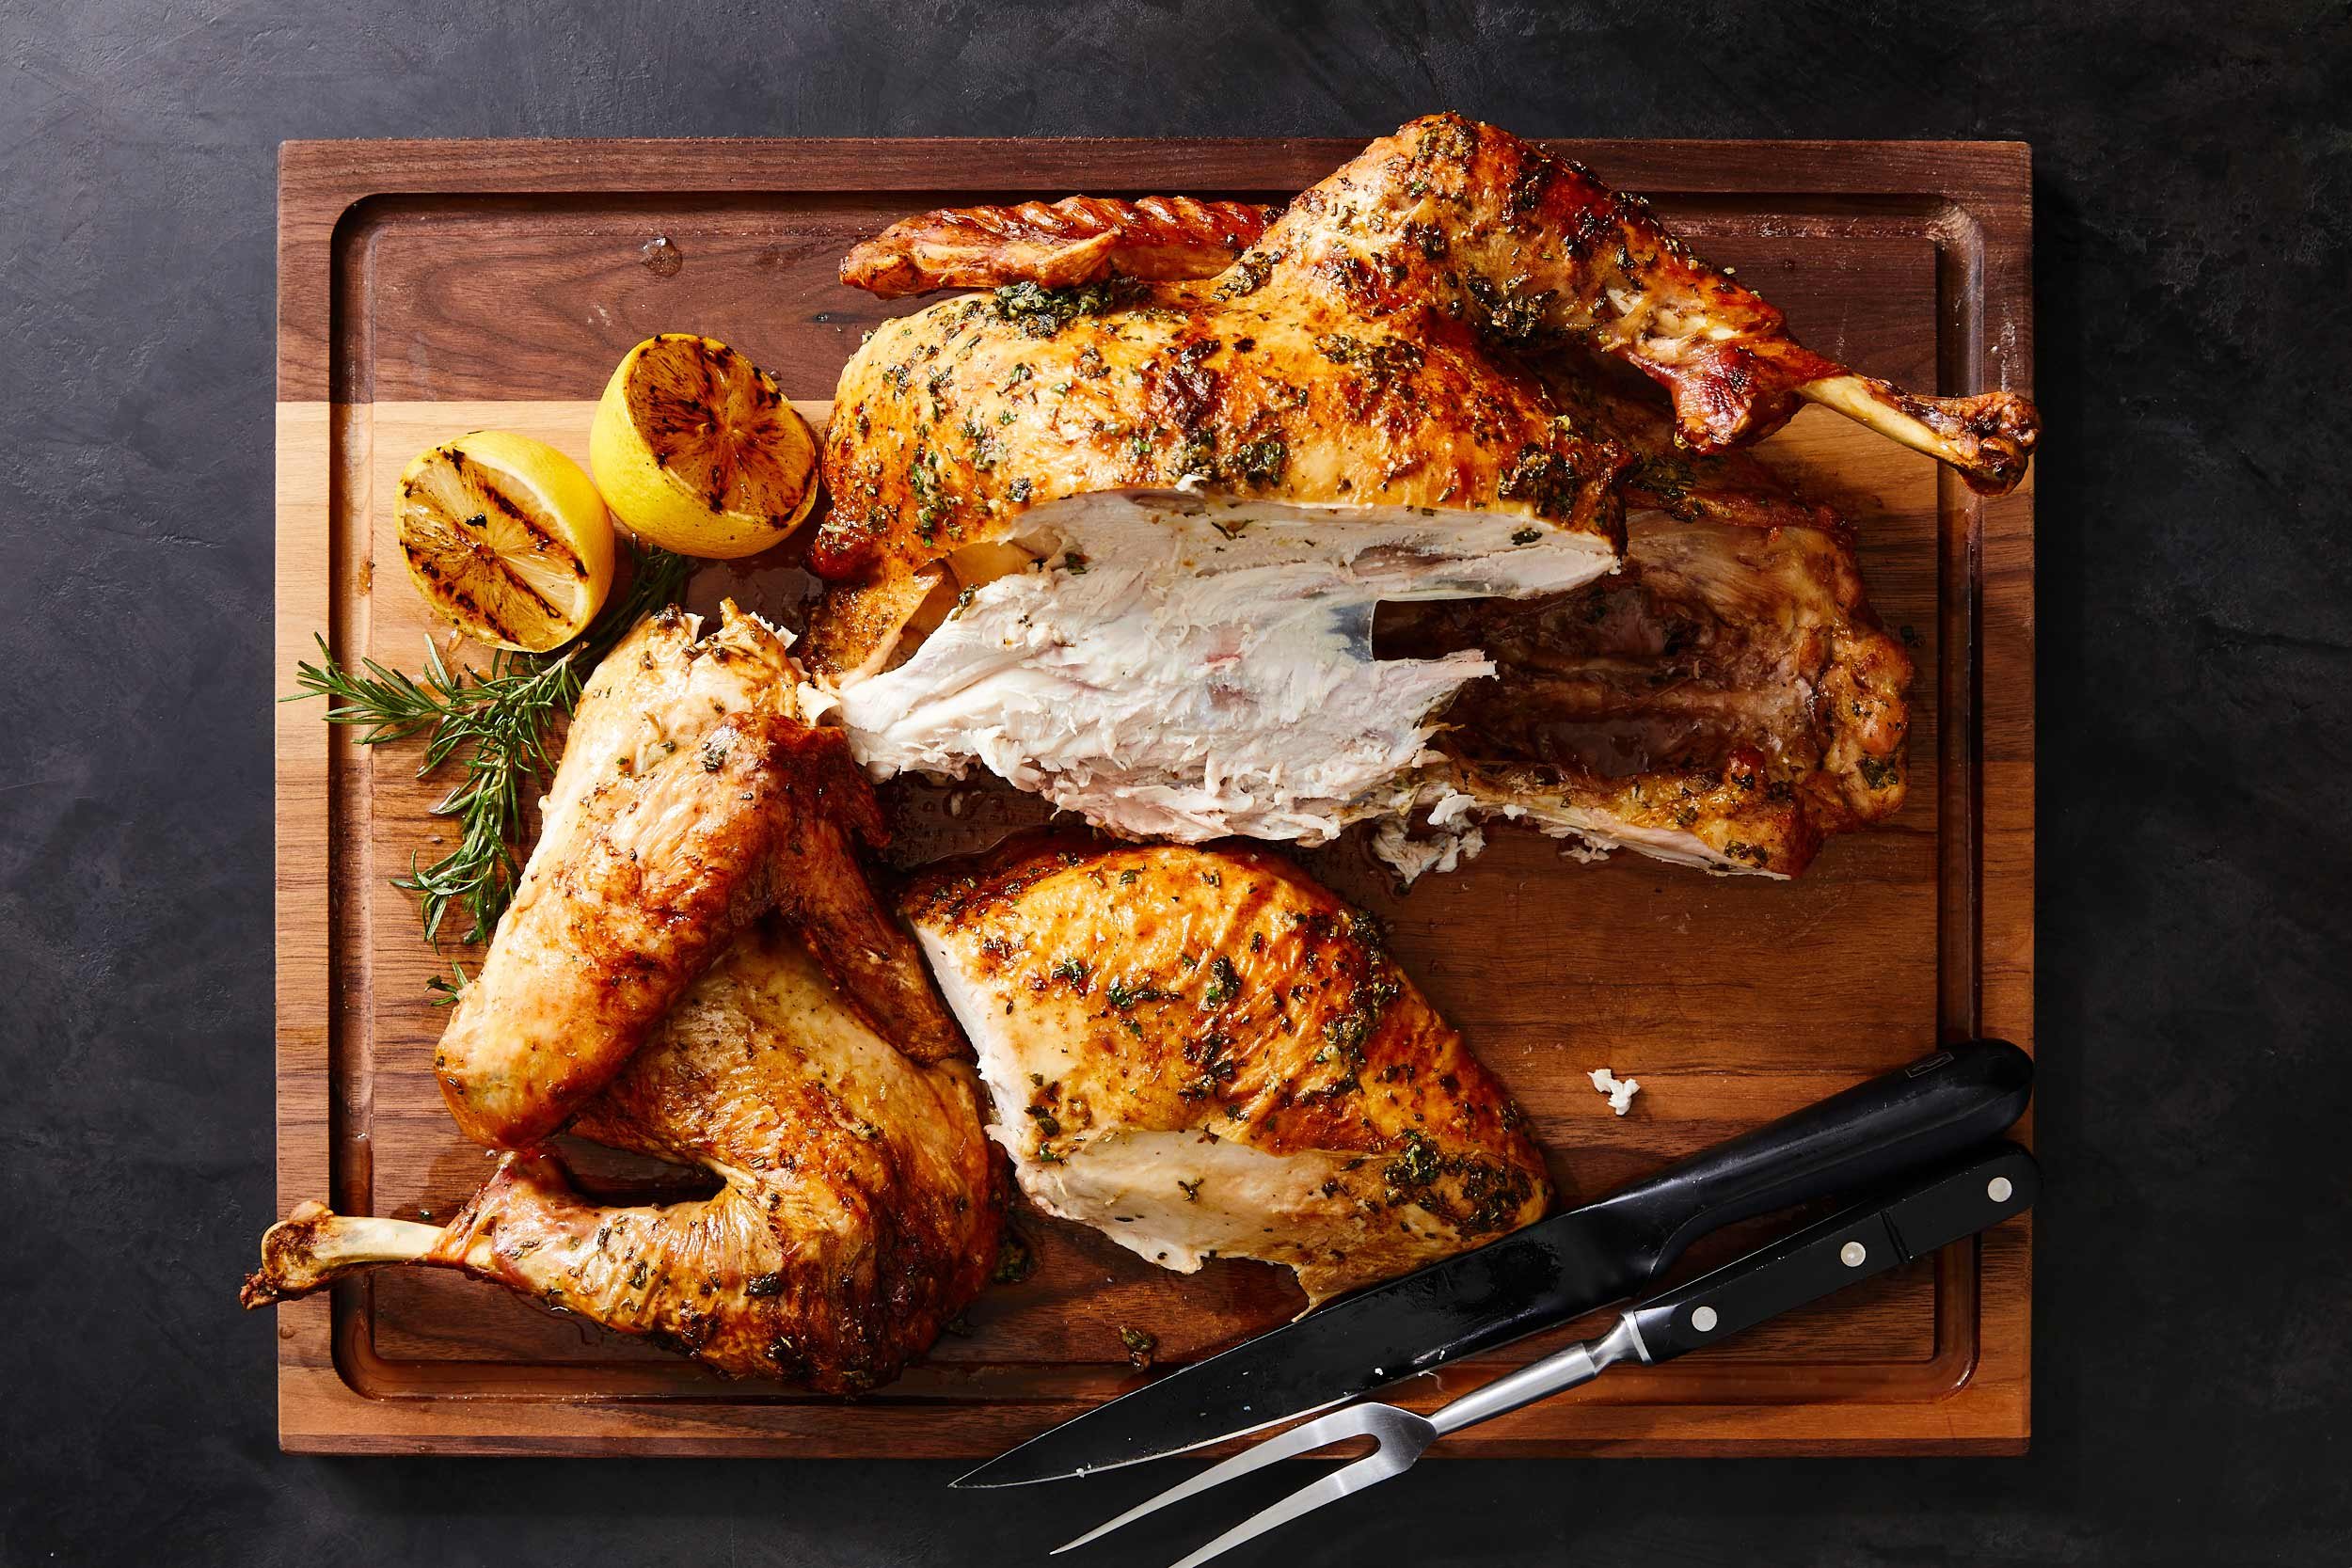 nyc-nj-food-editorial-photographer-grilled-turkey-cutting-board.jpg